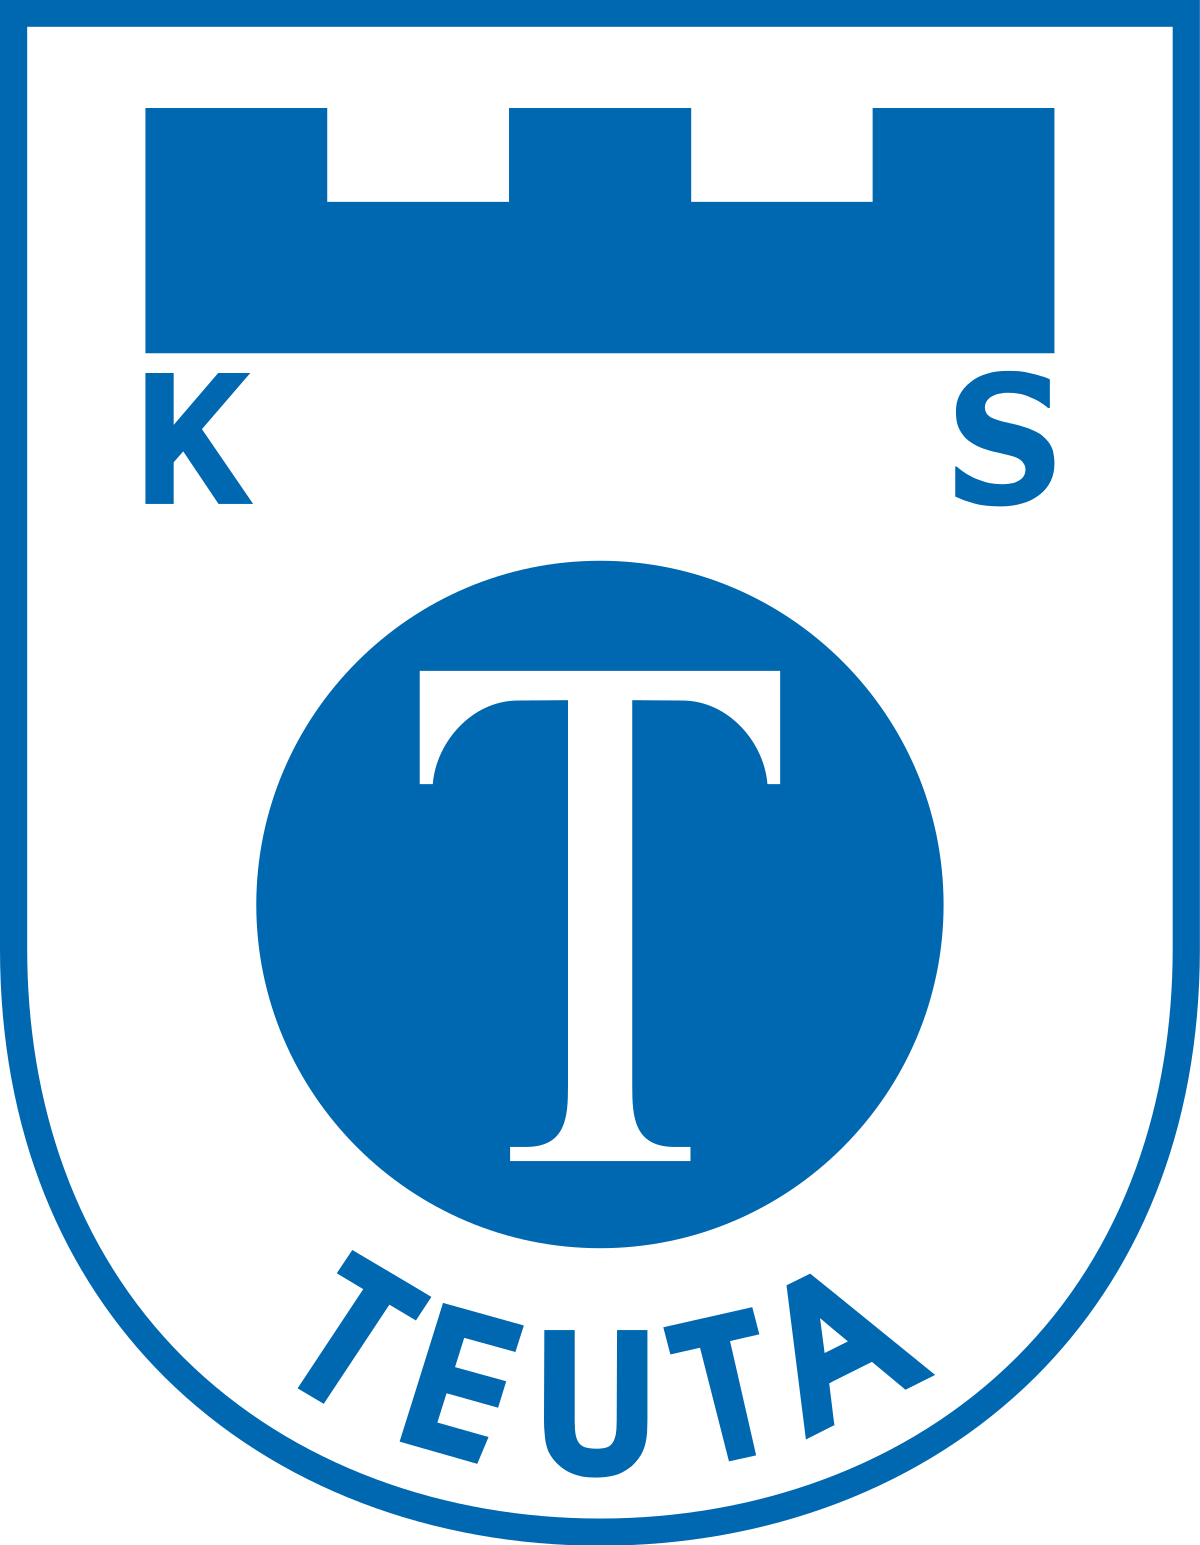 Partizani Tirana vs KF Teuta Prediction: Partizani will extend their dominance